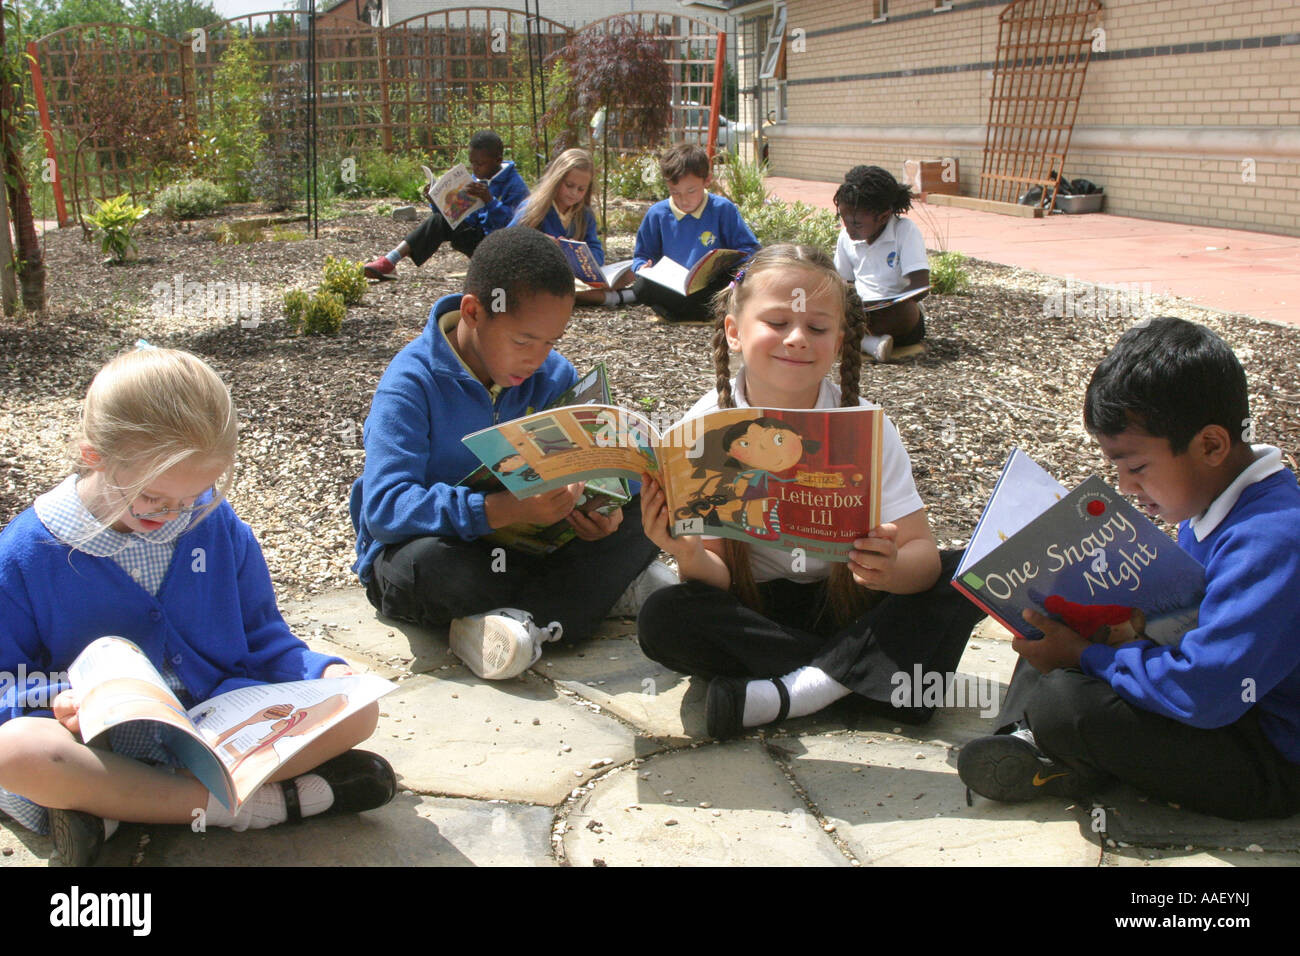 Primary school children in playground reading books Stock Photo